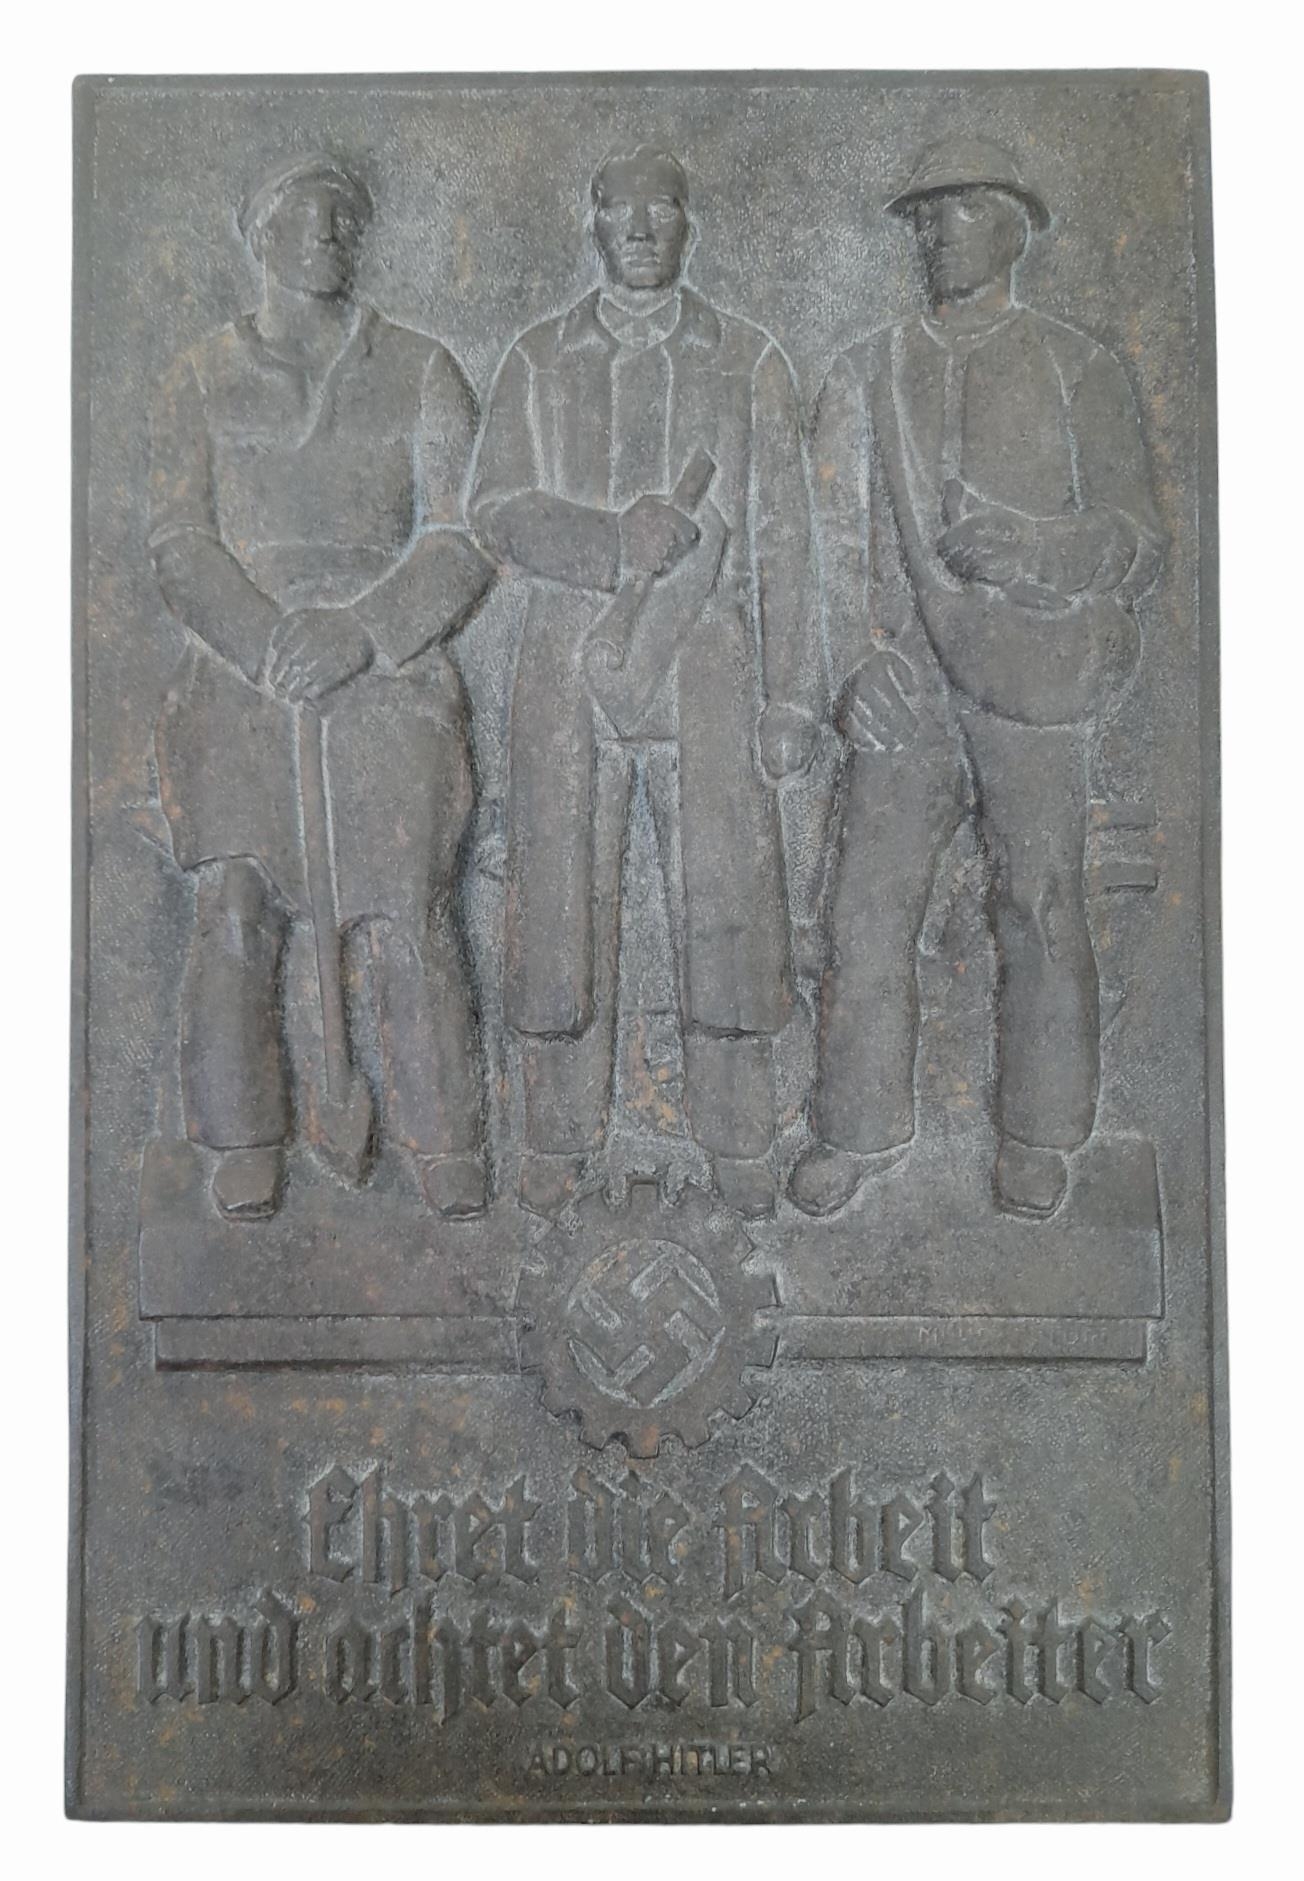 3rd Reich Deutsche Arbeitsfront (Labour Force) Cast Iron Plaque. “Adolf Hitler Respects the Labour